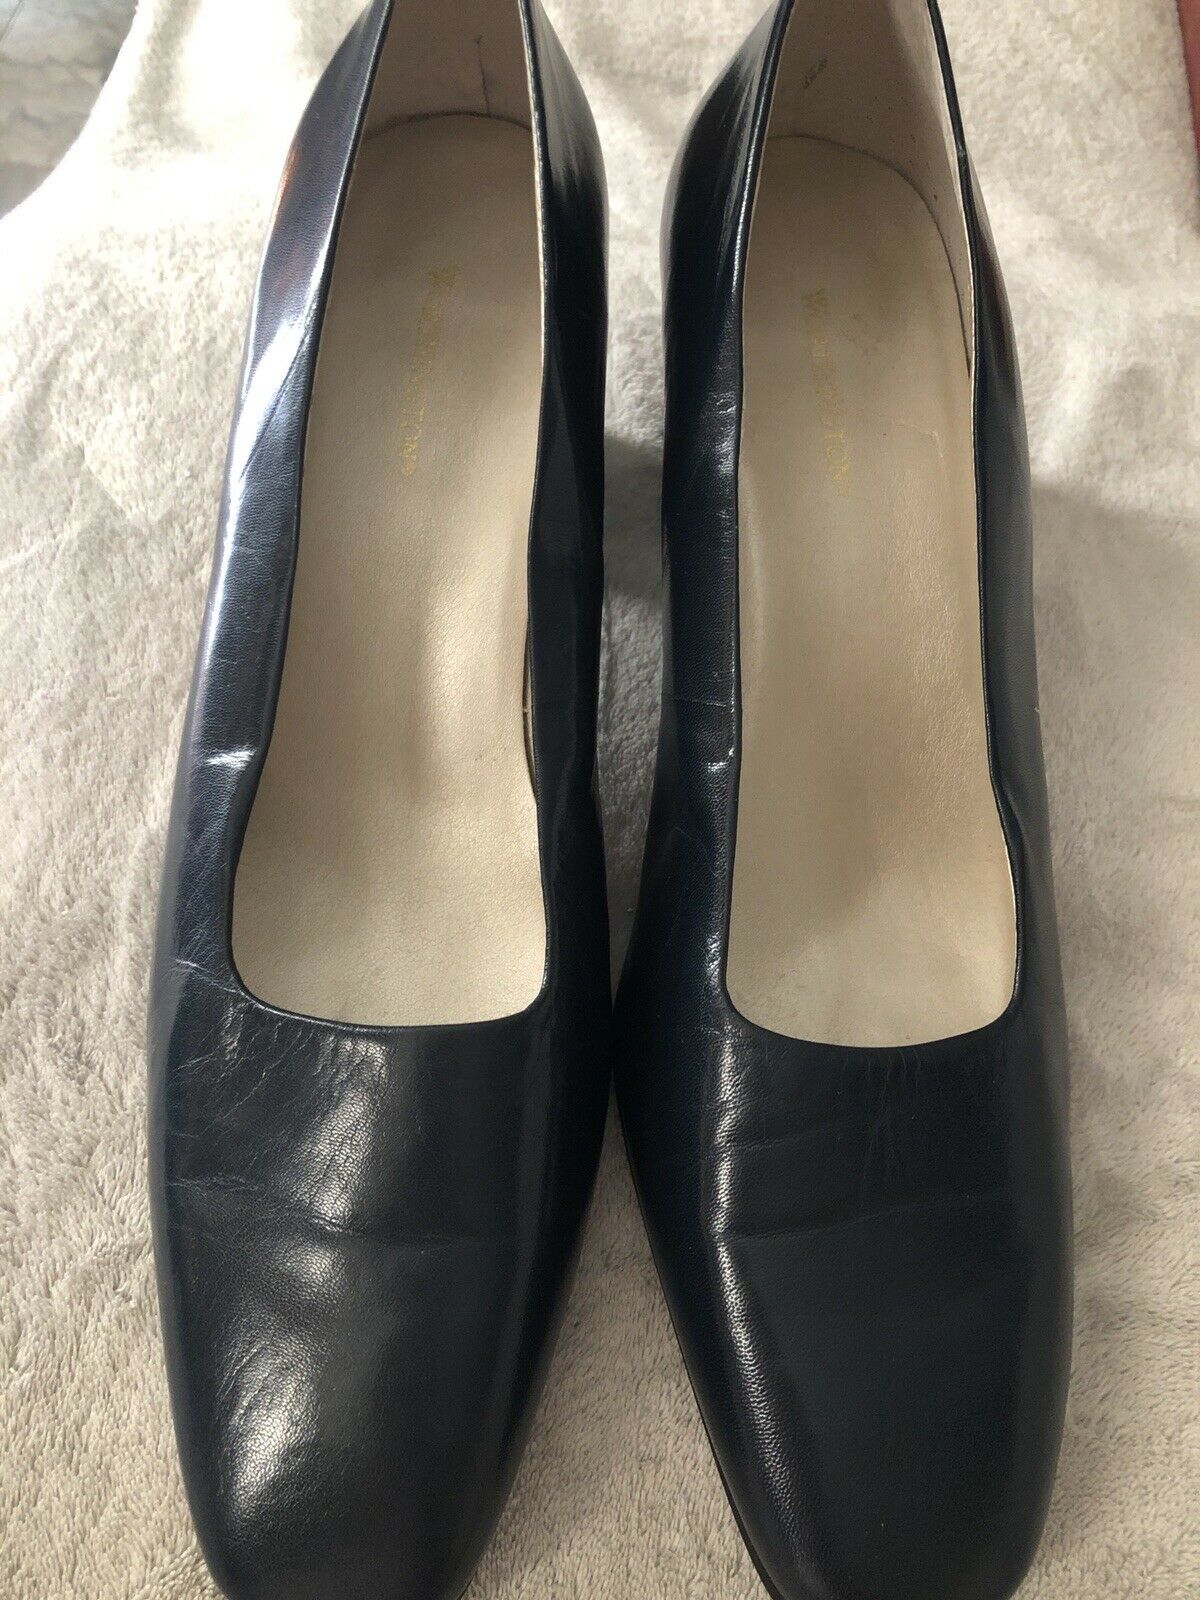 Worthington Women’s High Heel Navy Dress Shoes 11M